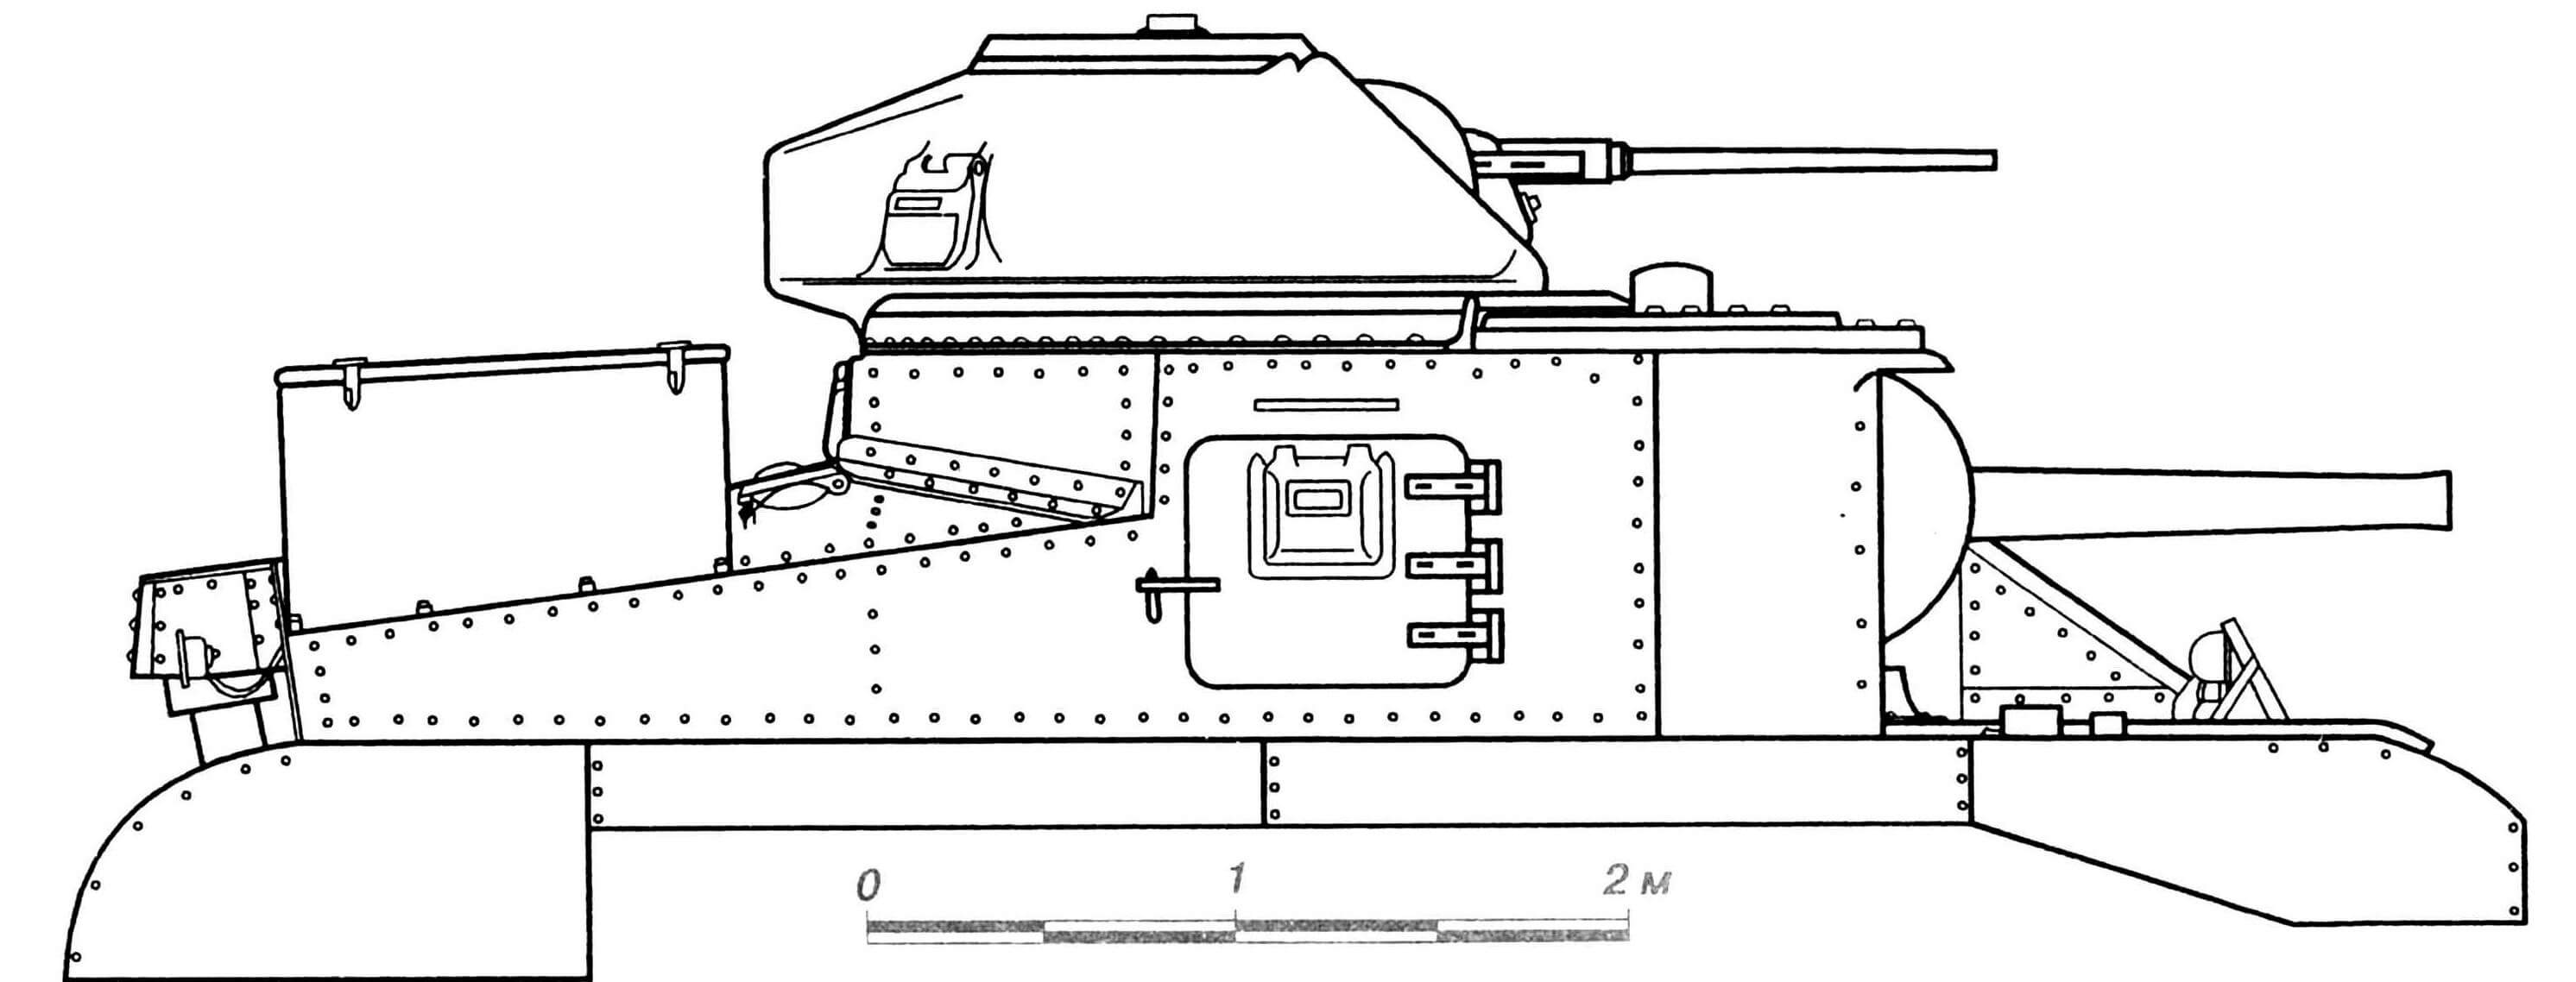 Cruiser Tank Grant I